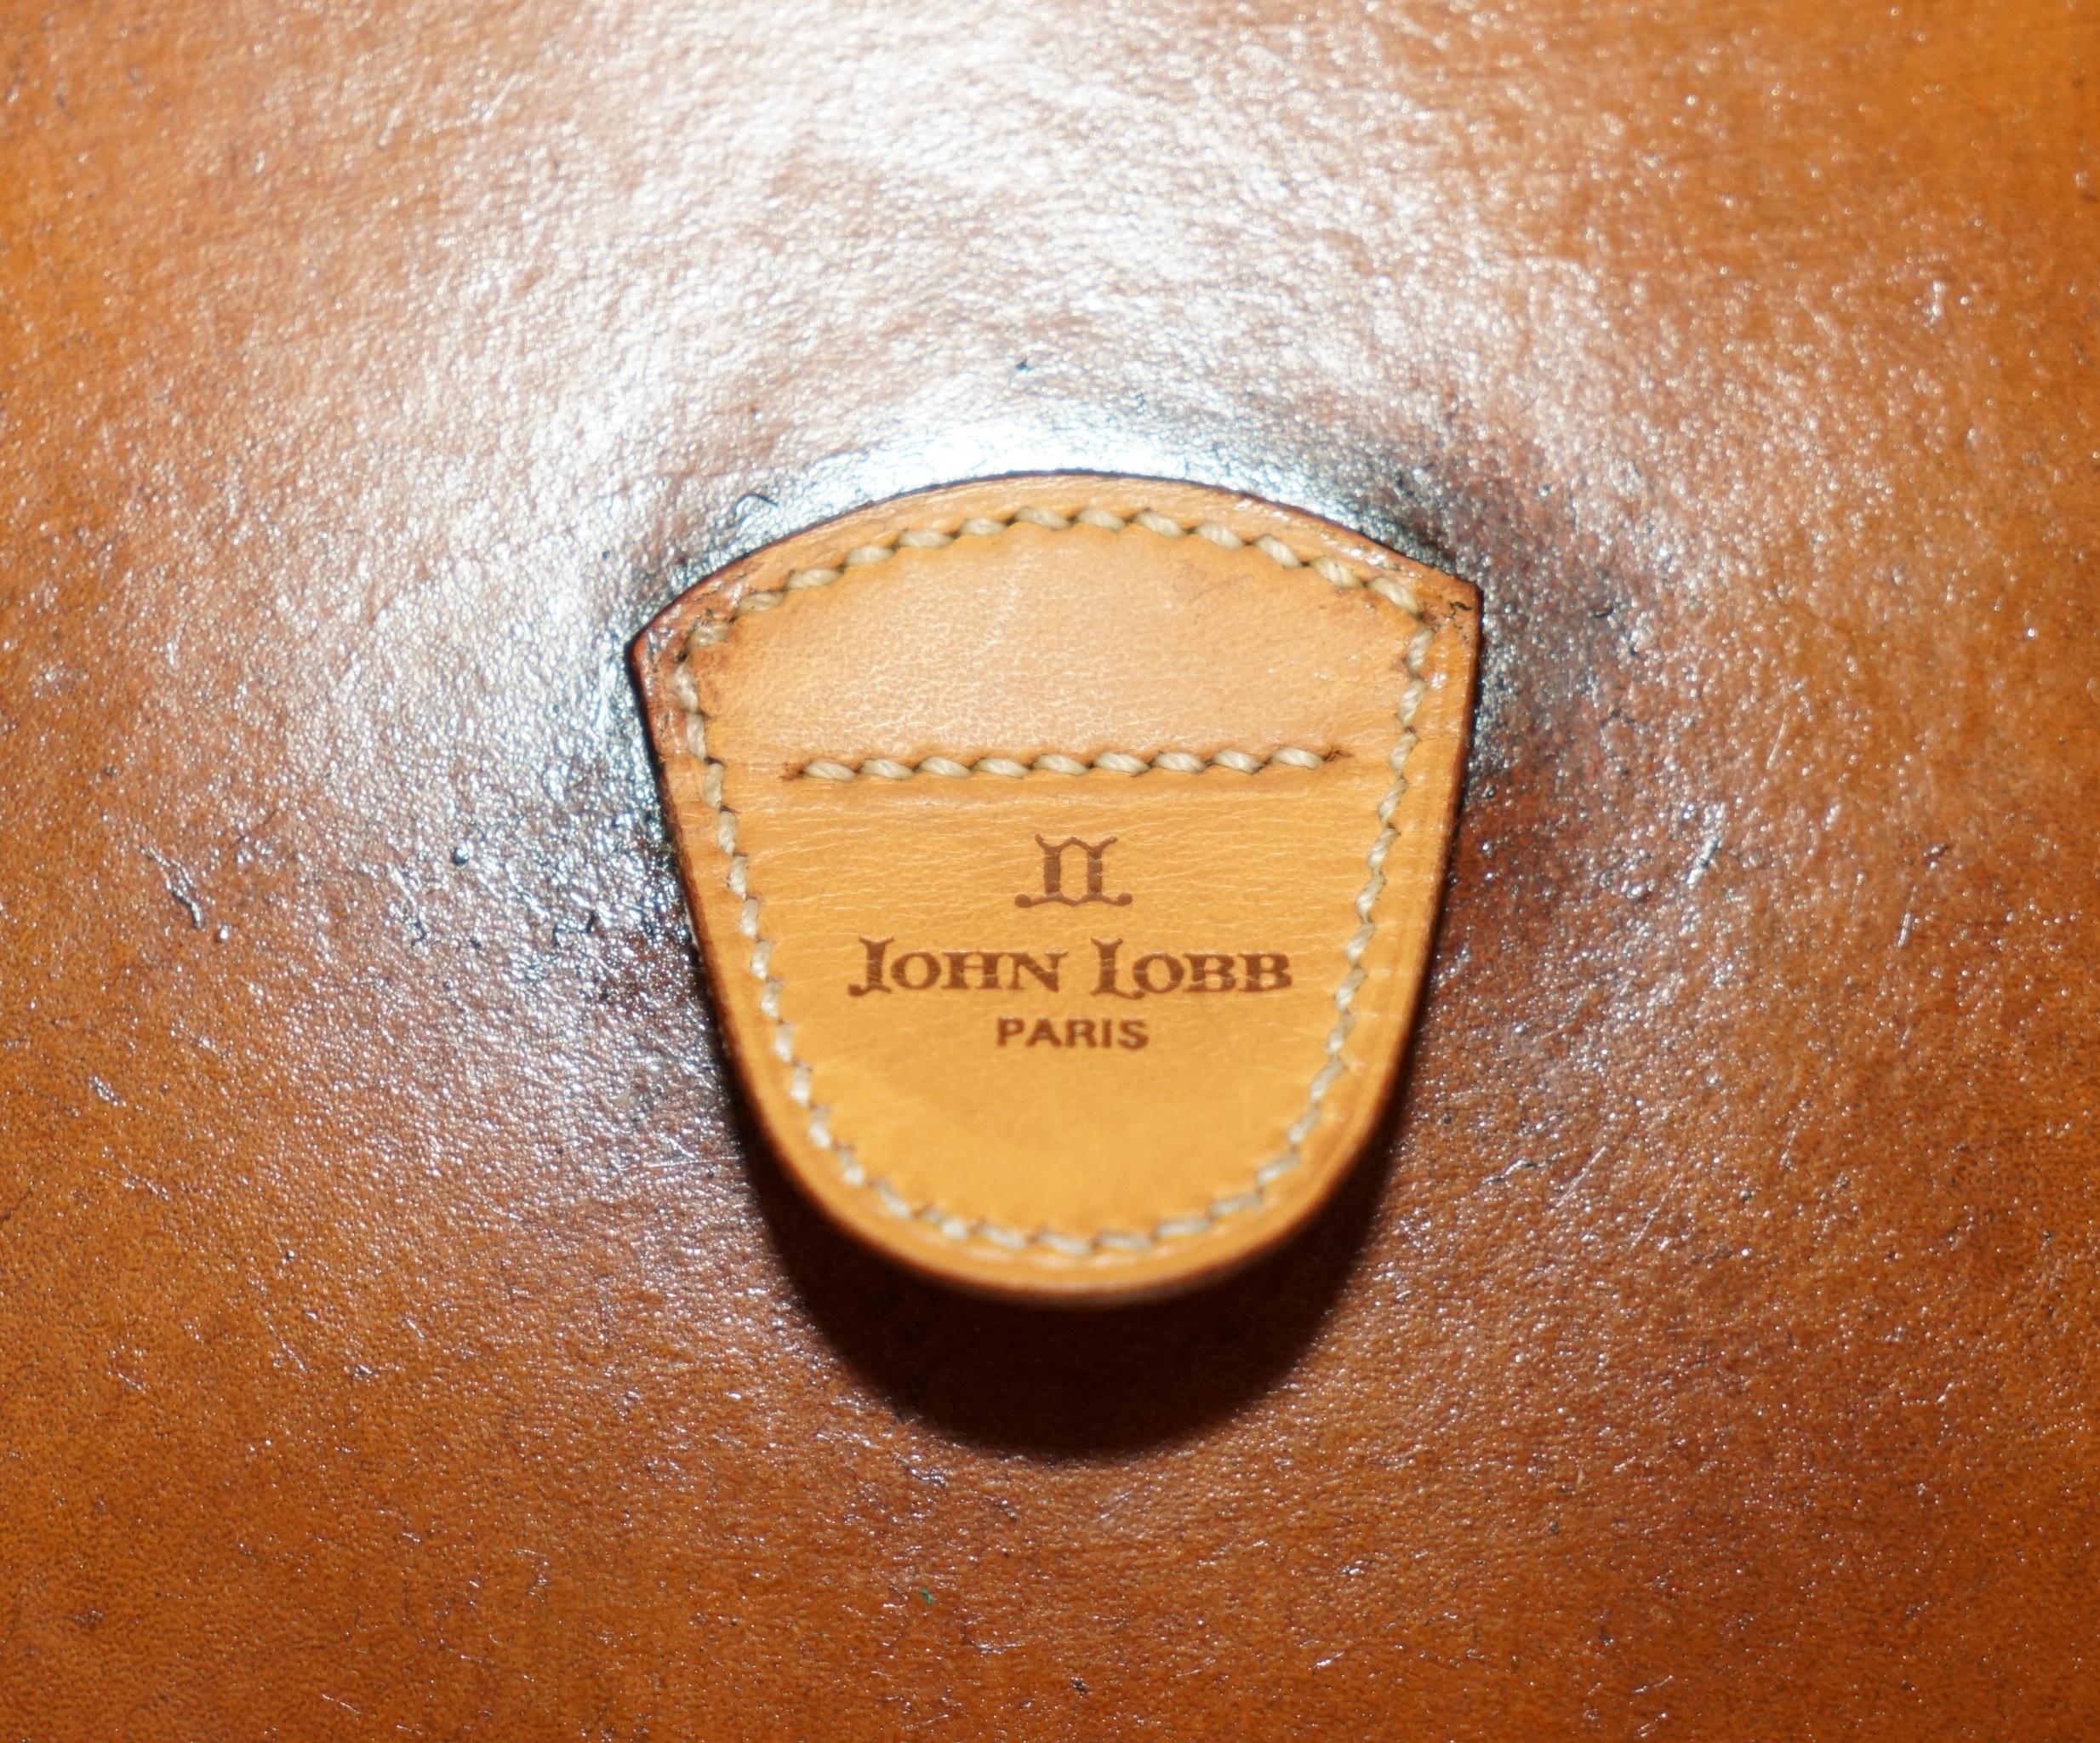 1 von 1 HERMES PARIS JOHN LOBB EXTRA LARGE SHOE TRUNK HANDDYED LEATHER PANELs im Angebot 7